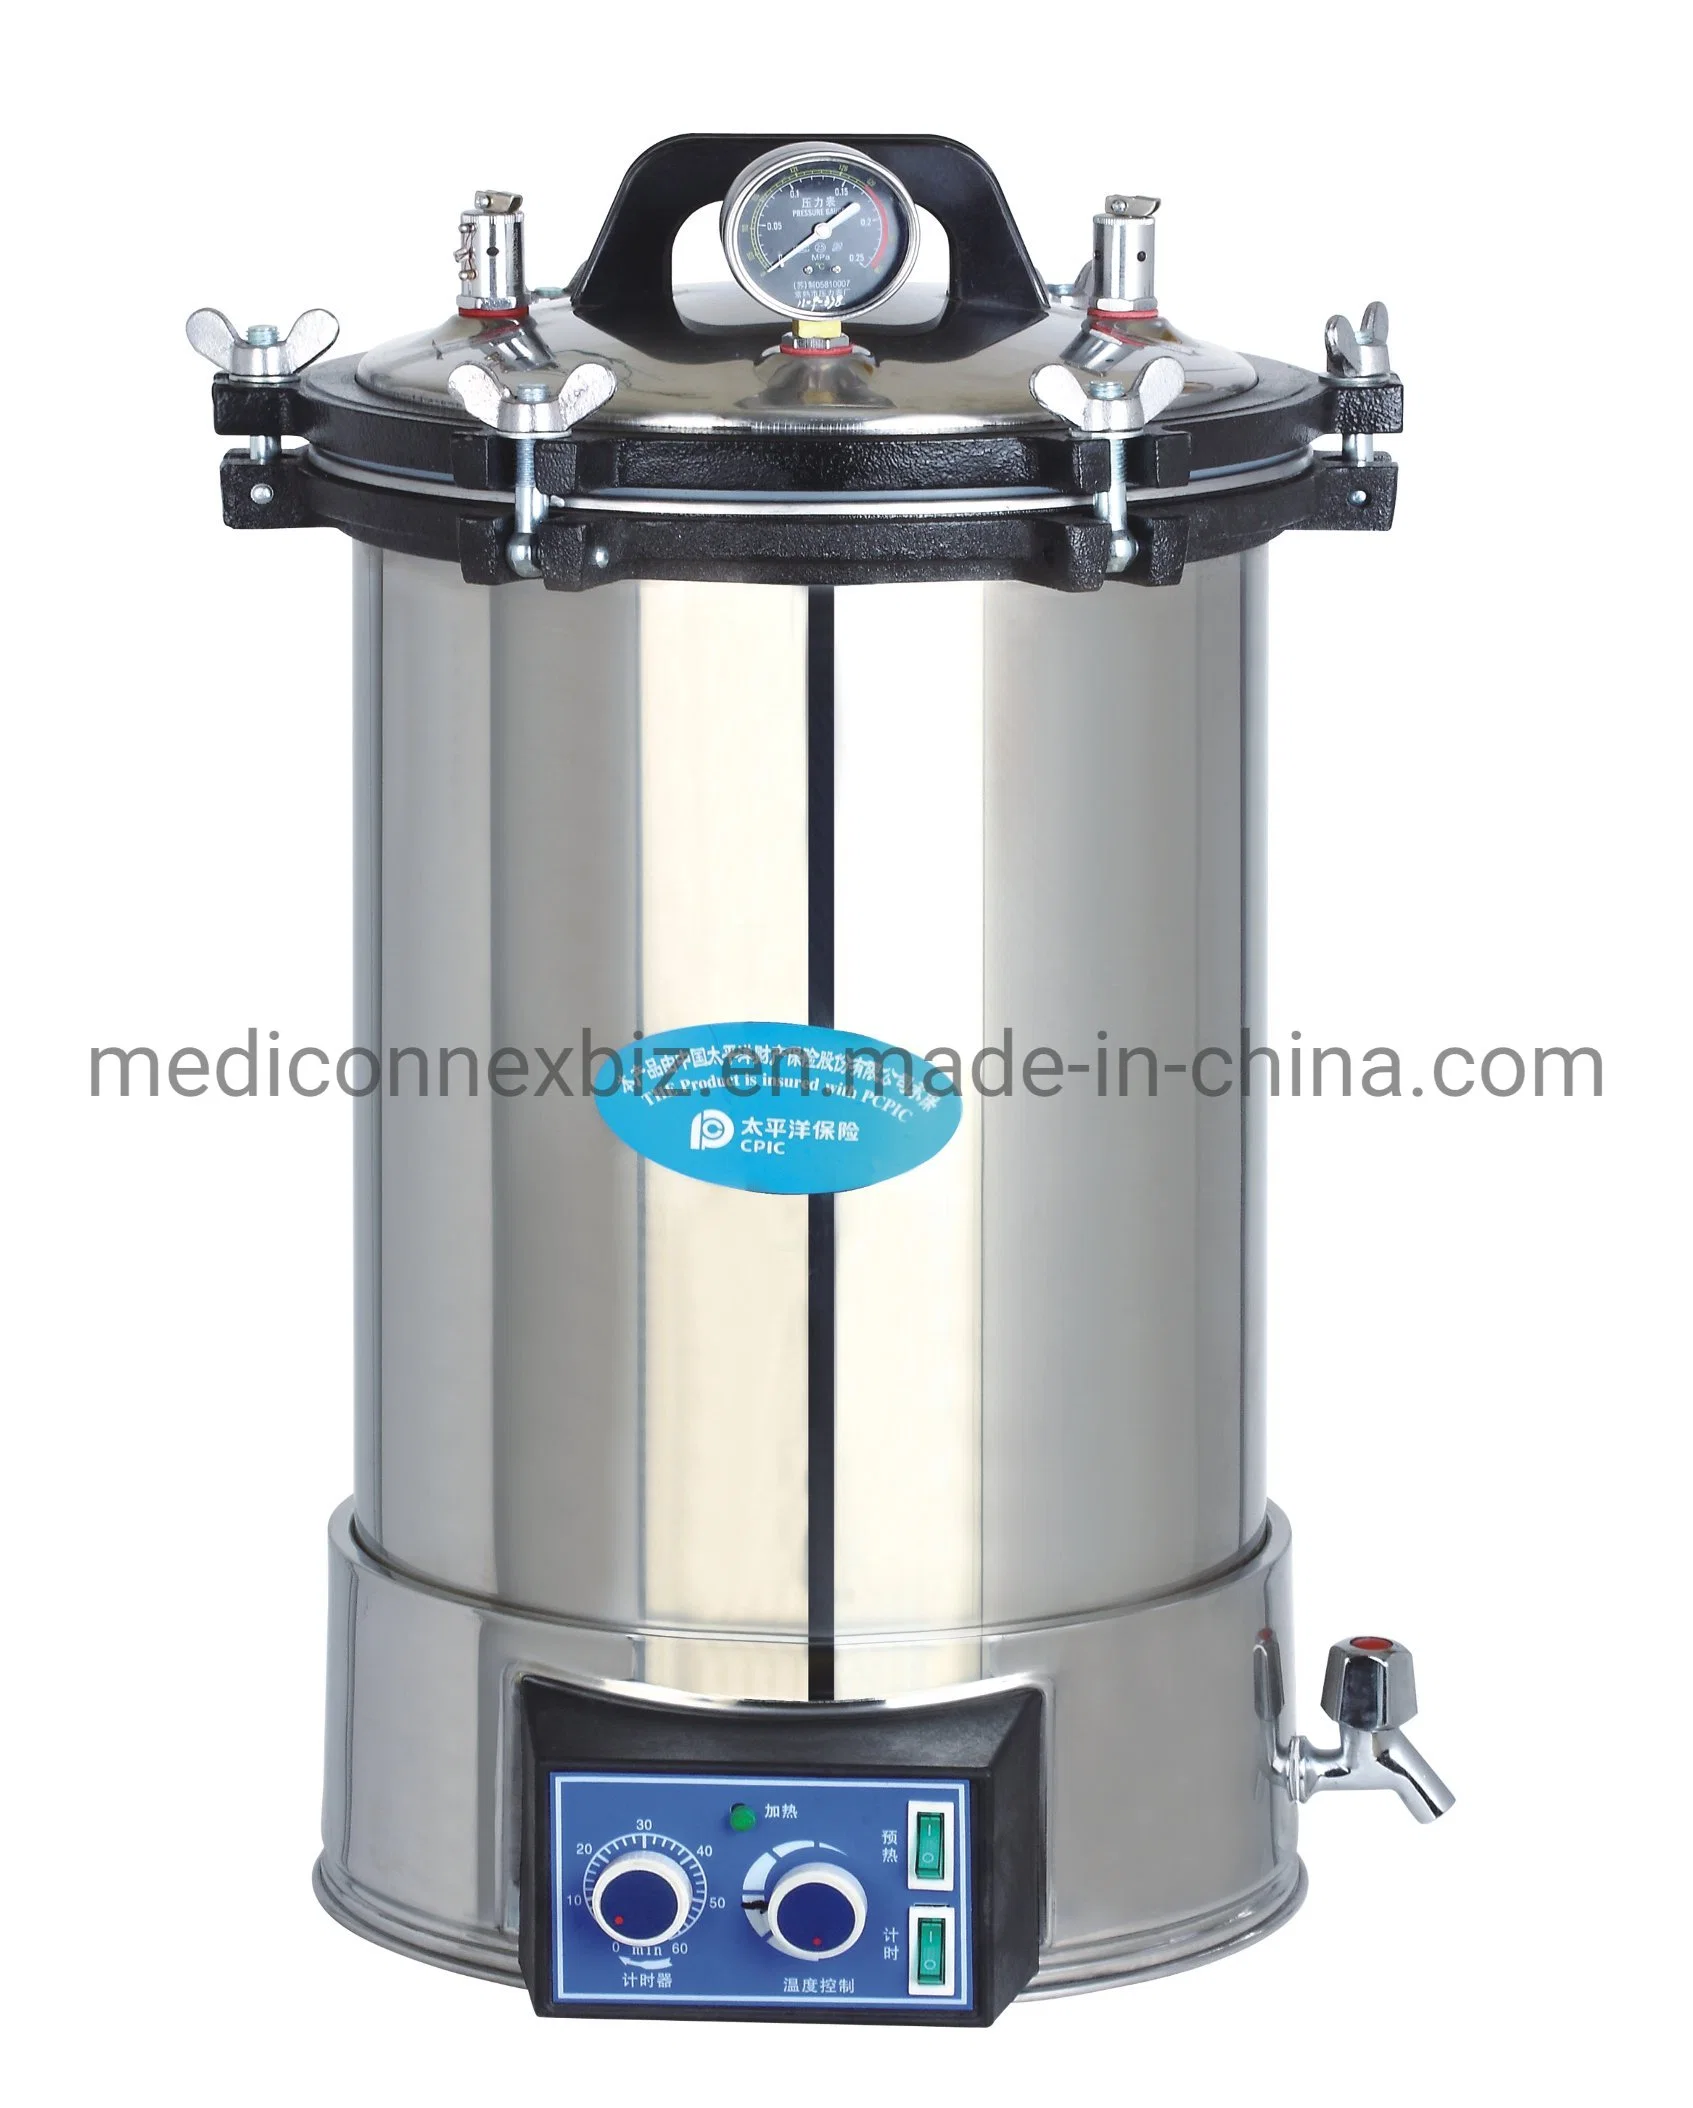 Portable Pressure Steam Sterilizer / Autoclave Hq-24ldj / Sterilizer/ Dental Equipment/ Medical Equipment